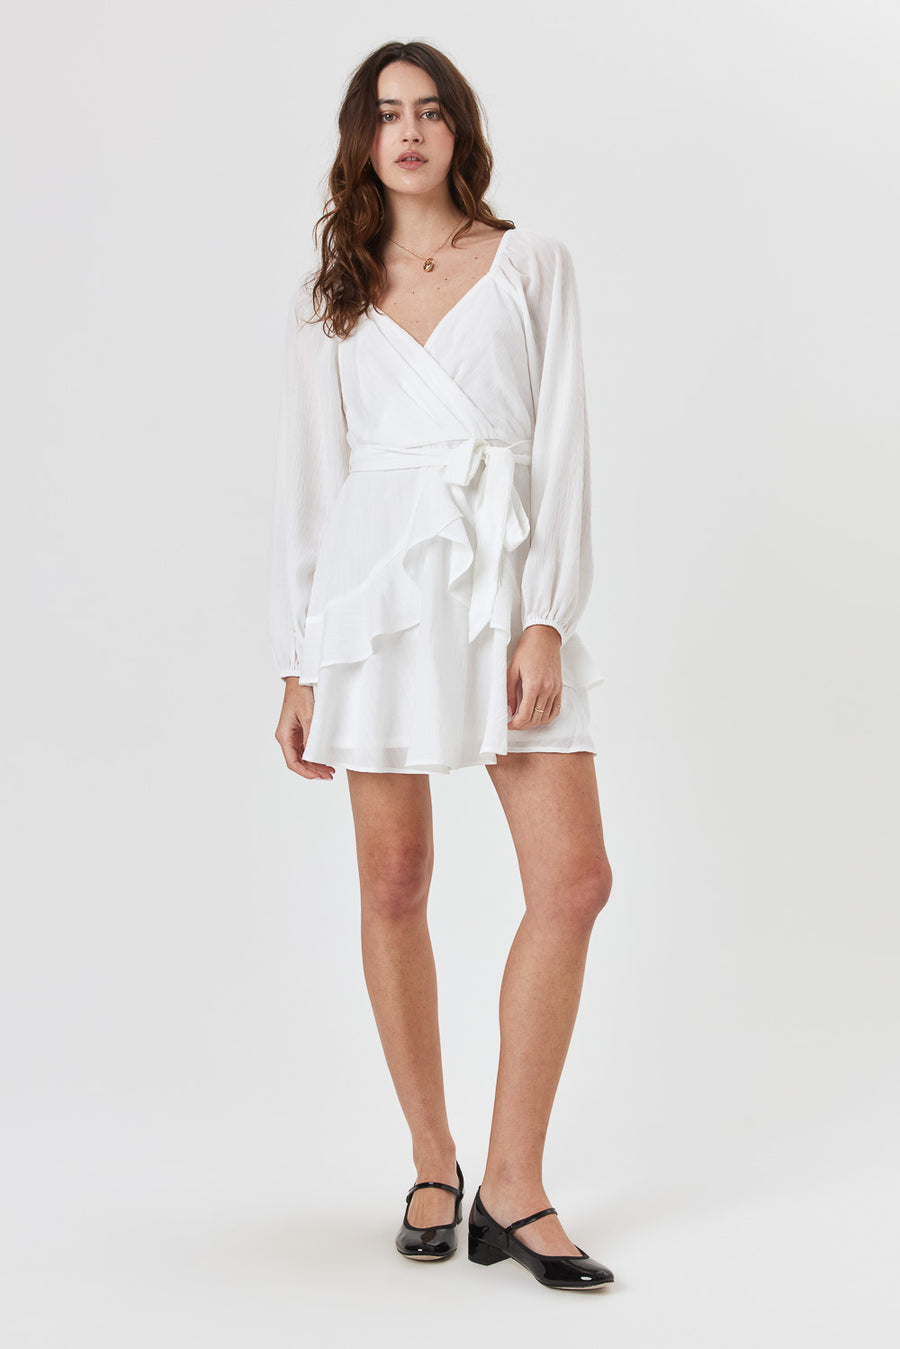 White Long Sleeve Wrap Skater Dress - Trixxi Clothing